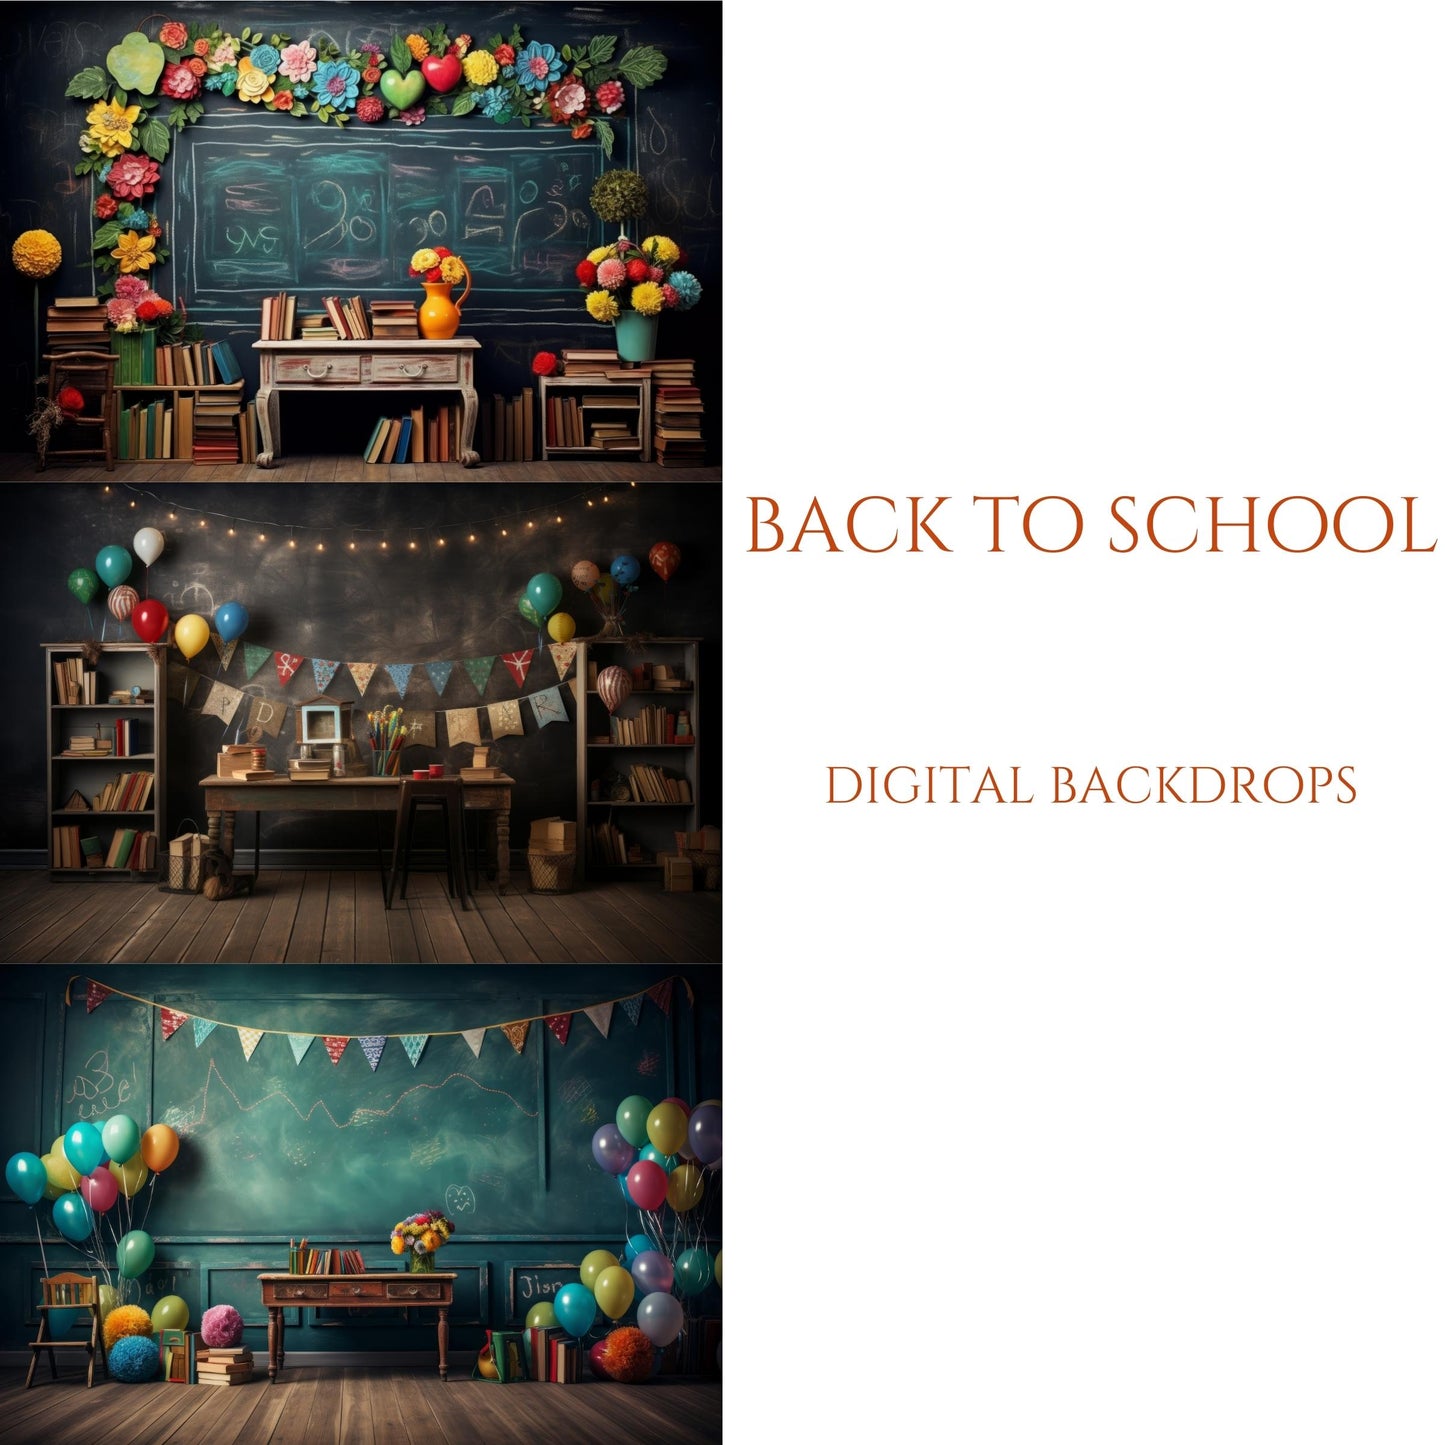 Back to School Digital Backdrops